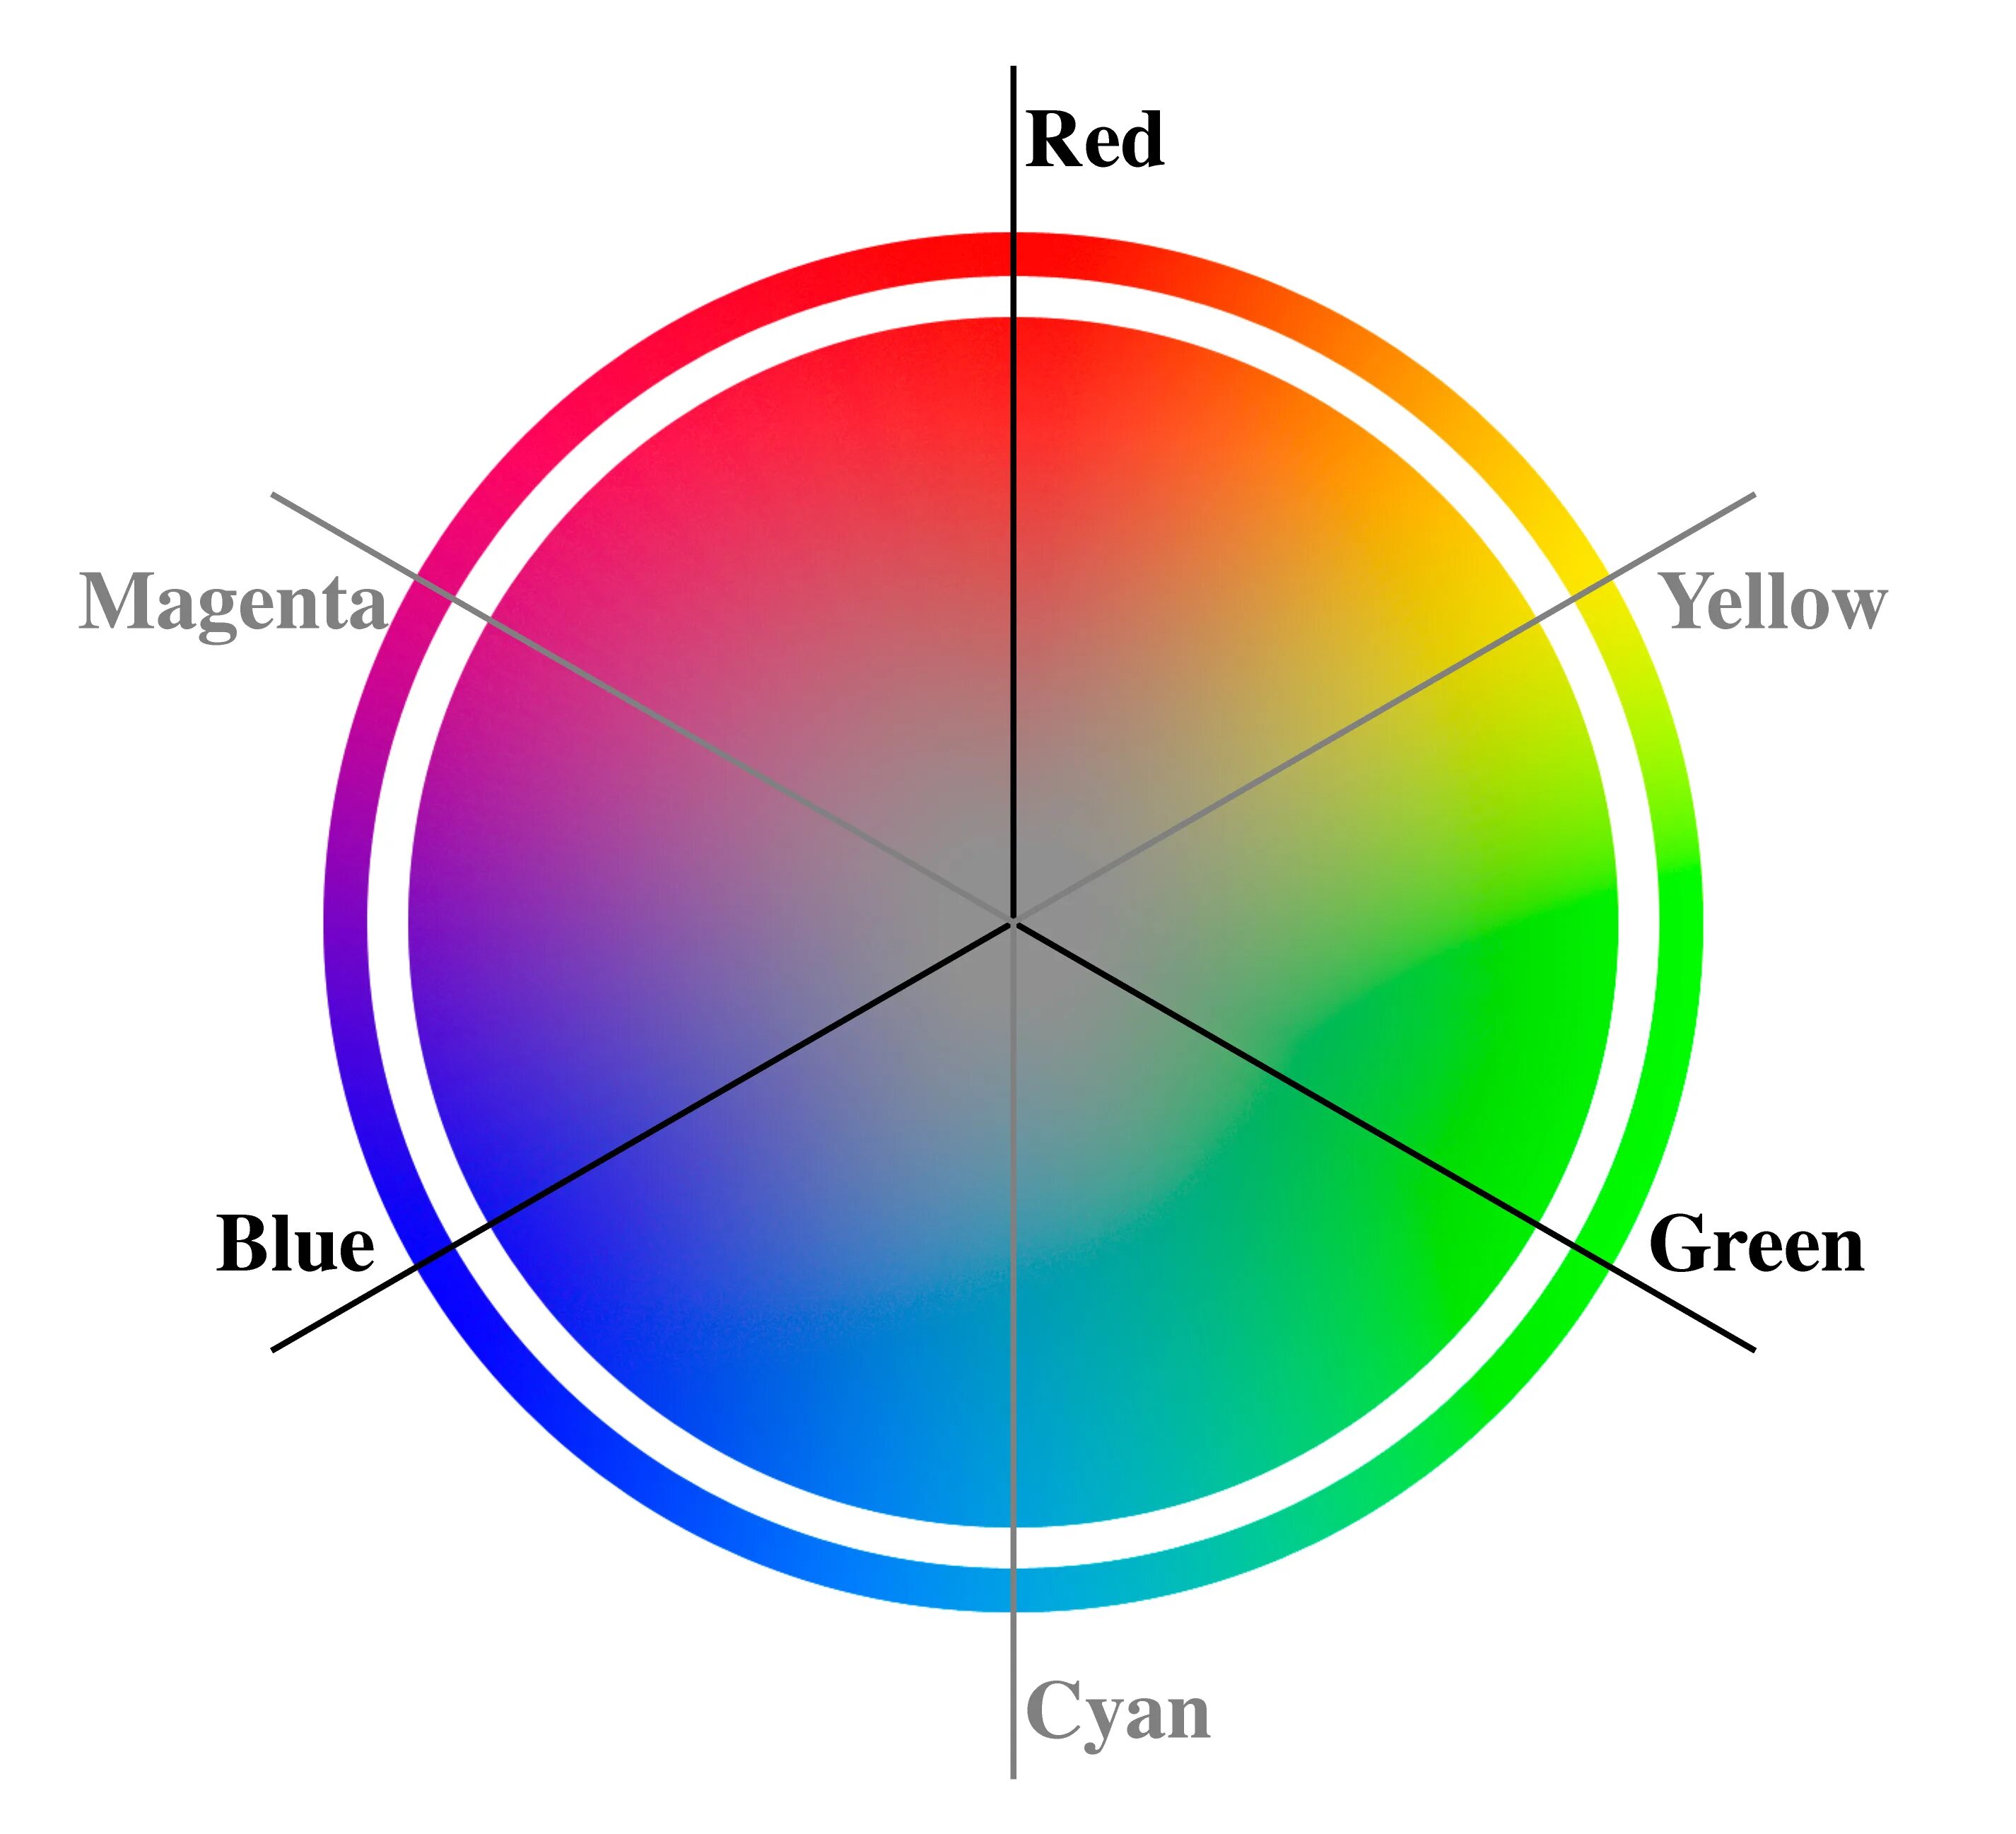 Стандартный круг. Цветовая модель HSB цветовой круг. Цветовой круг RGB. HSL цветовая модель. Цветовой круг HSL.